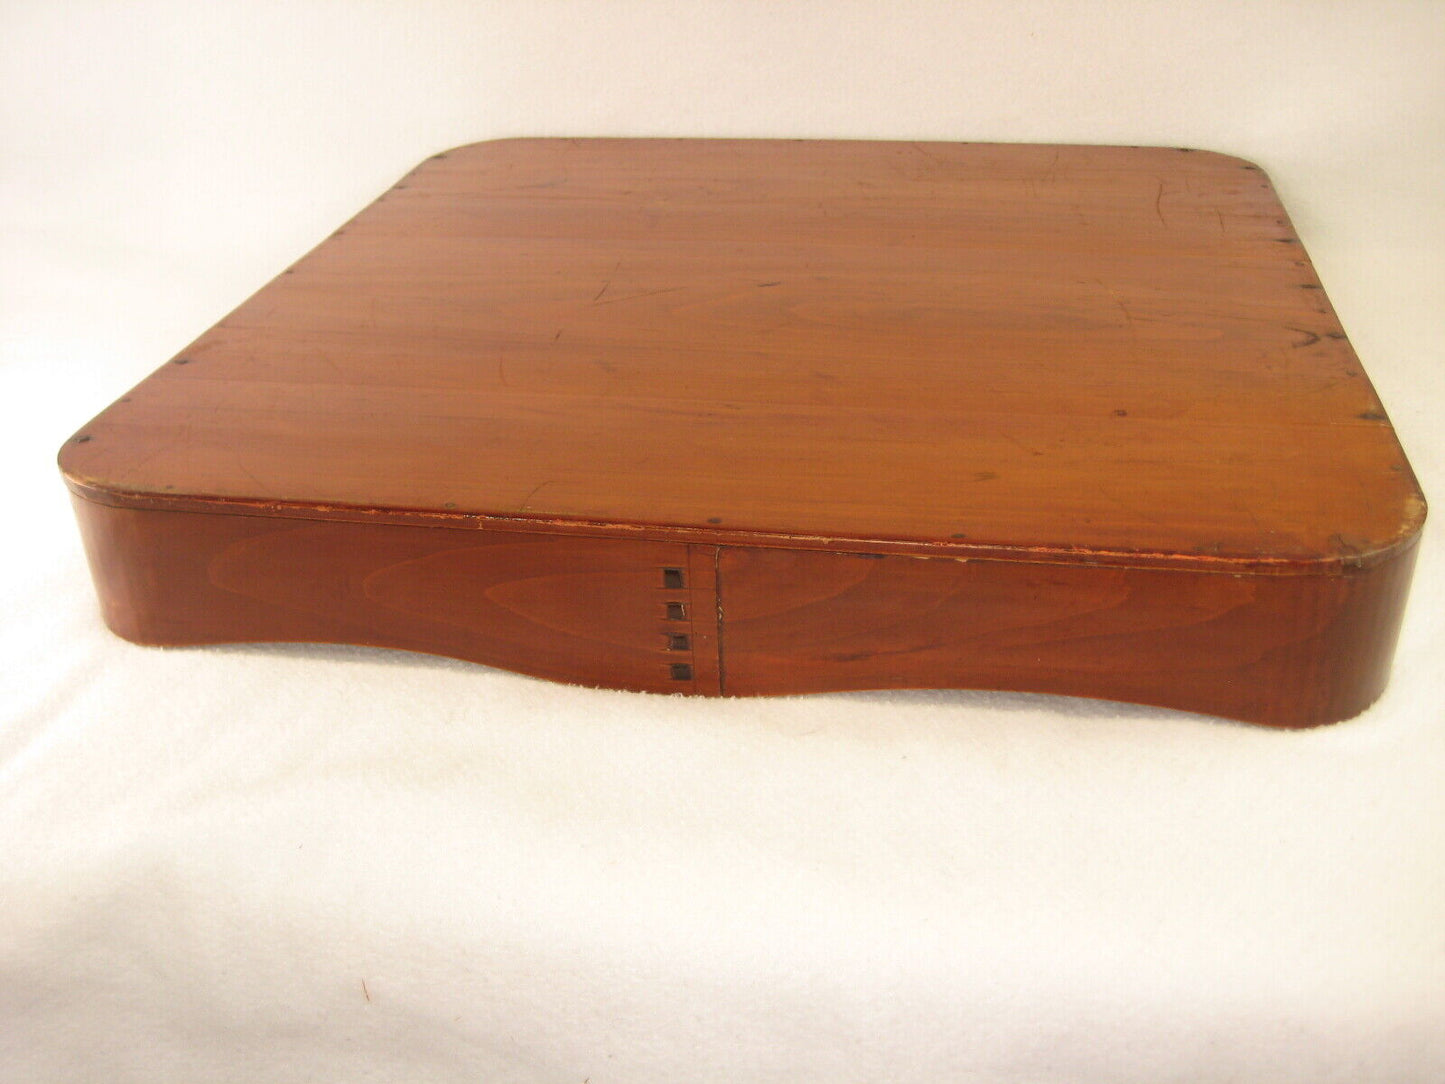 Antique Meiji Era C1890 Japanese Wood & Lacquer Obon Ozen Large Serving Tray